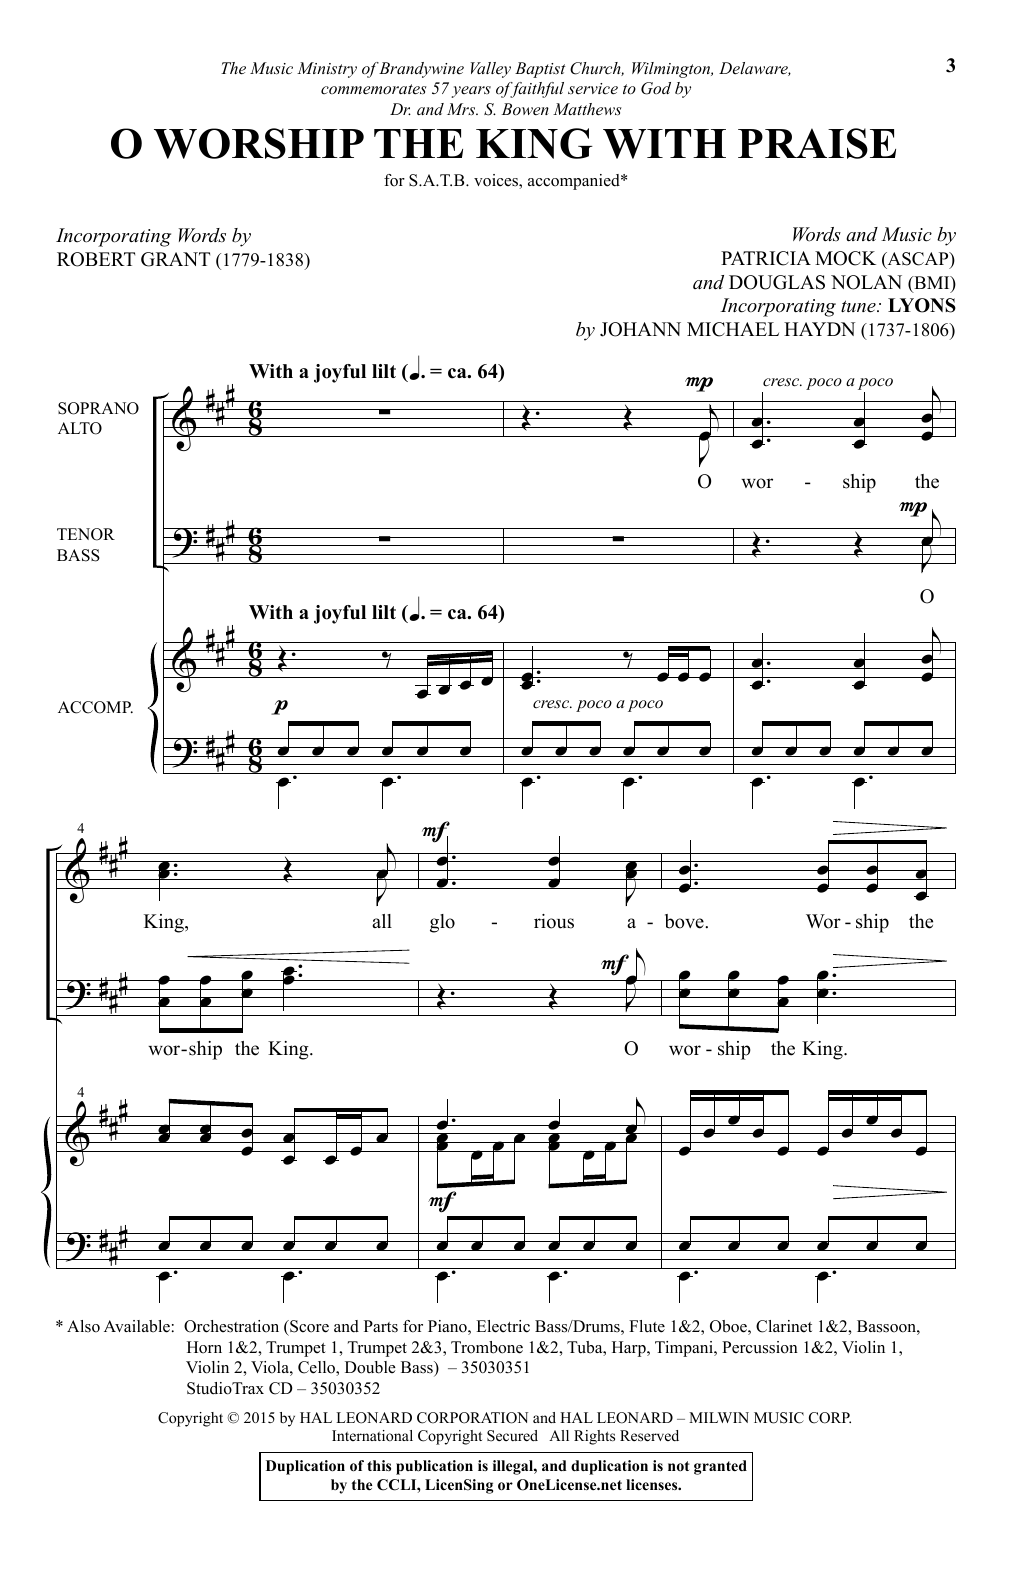 Douglas Nolan O Worship The King With Praise sheet music notes and chords arranged for SATB Choir